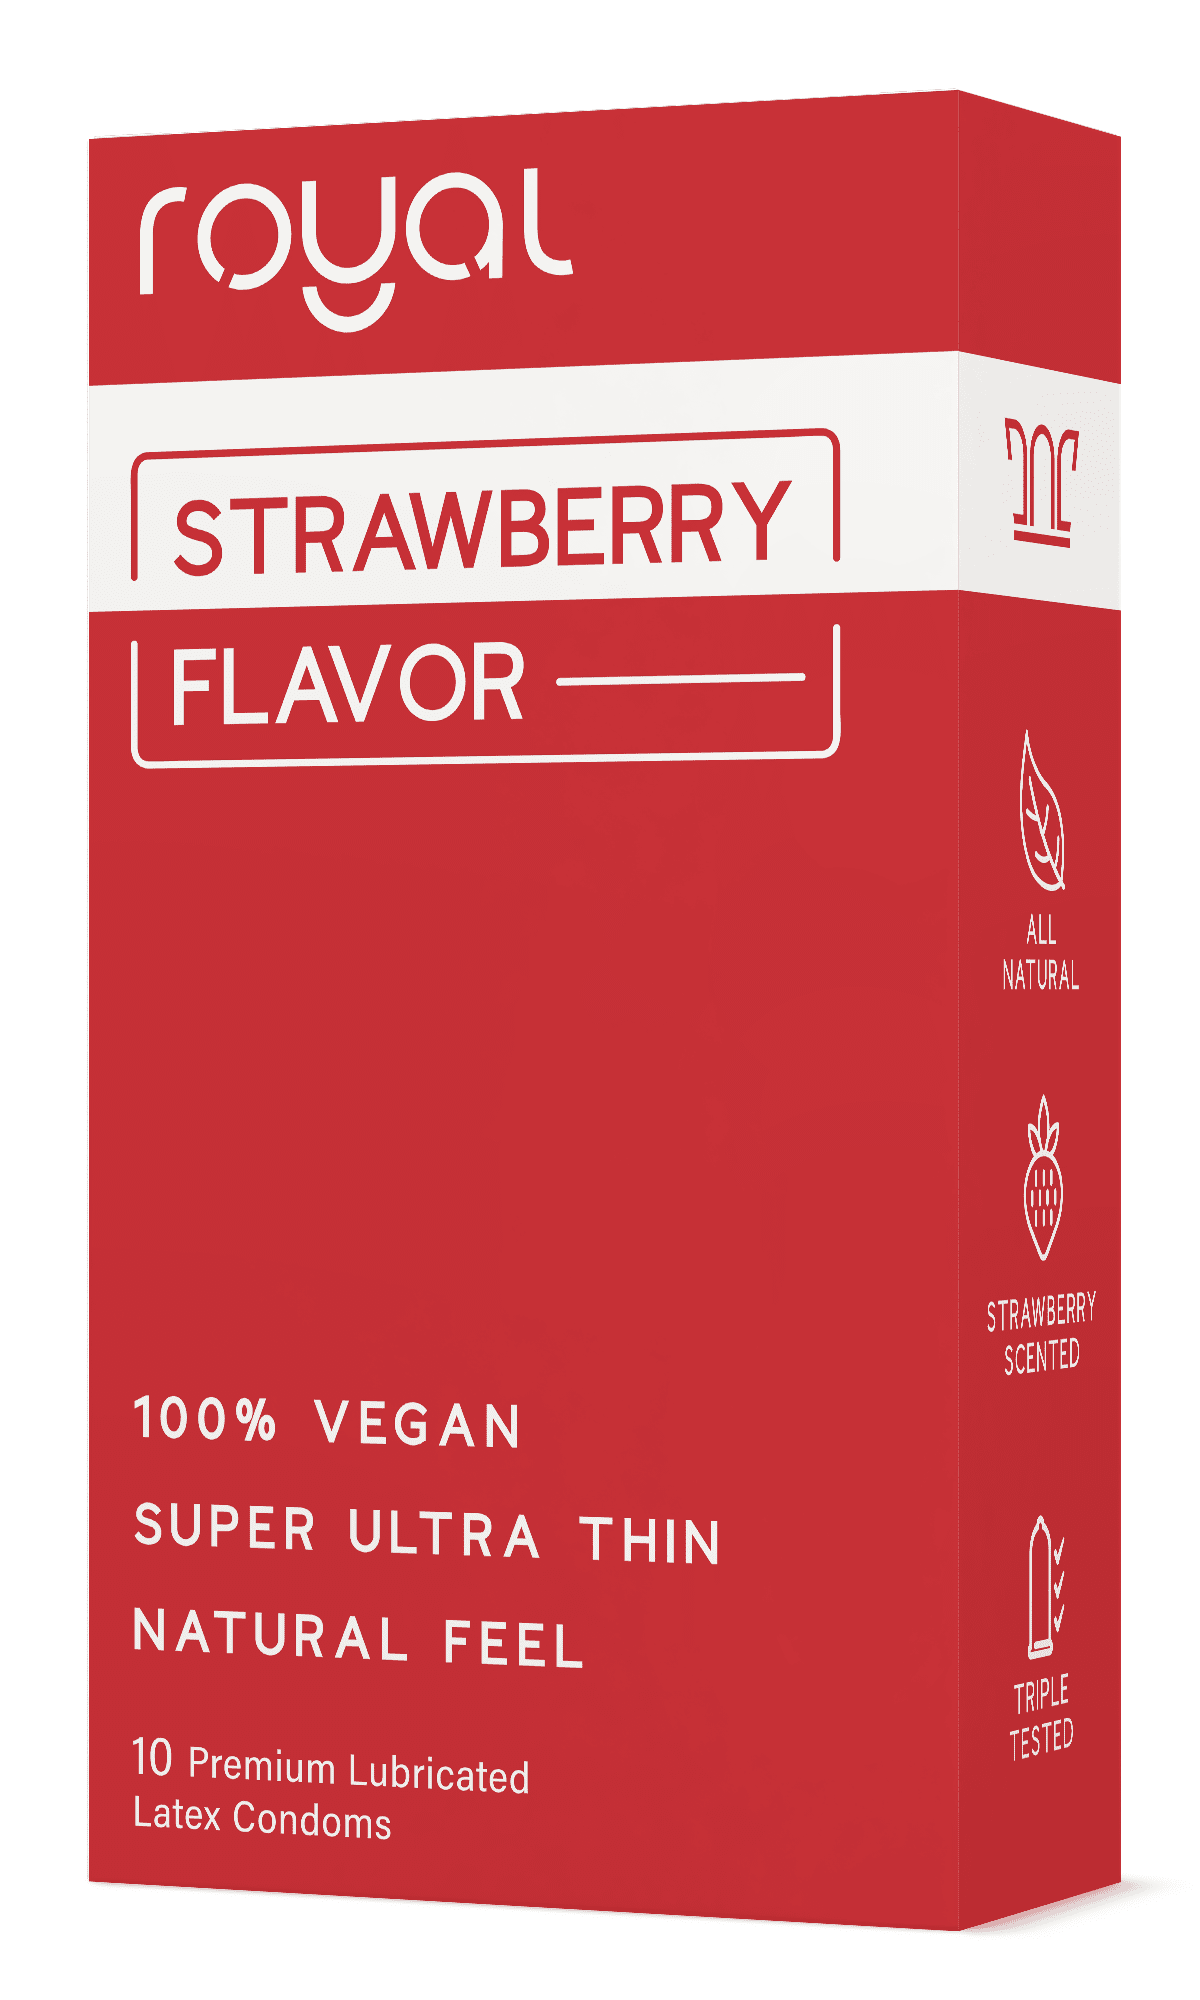 Strawberry Flavored Condoms...